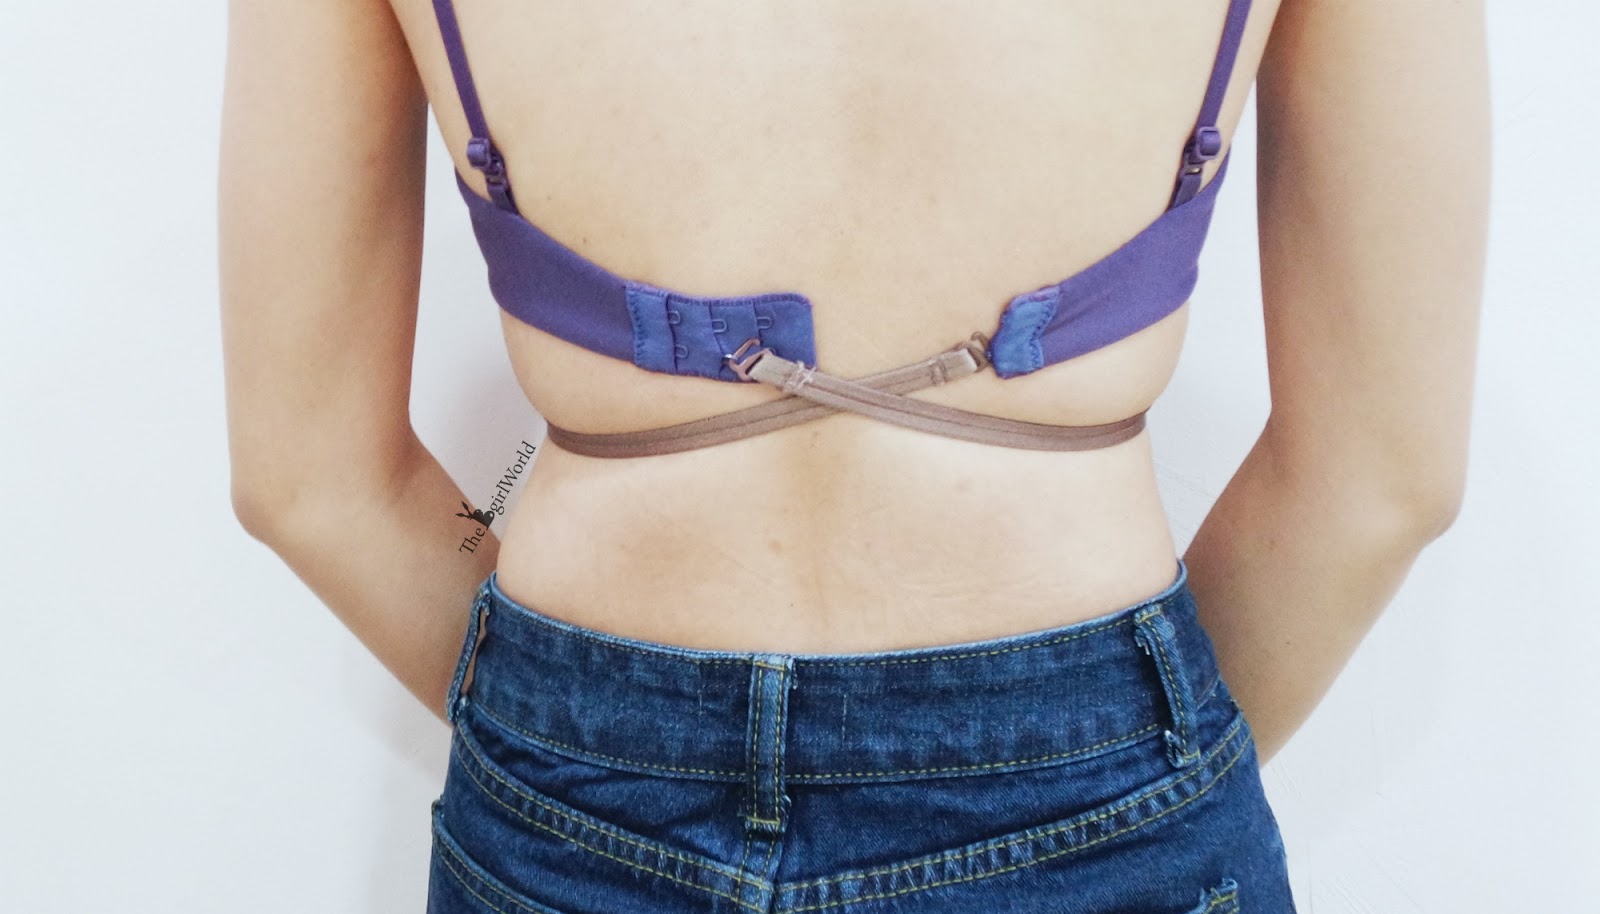 DIY bra to wear backless top/dress